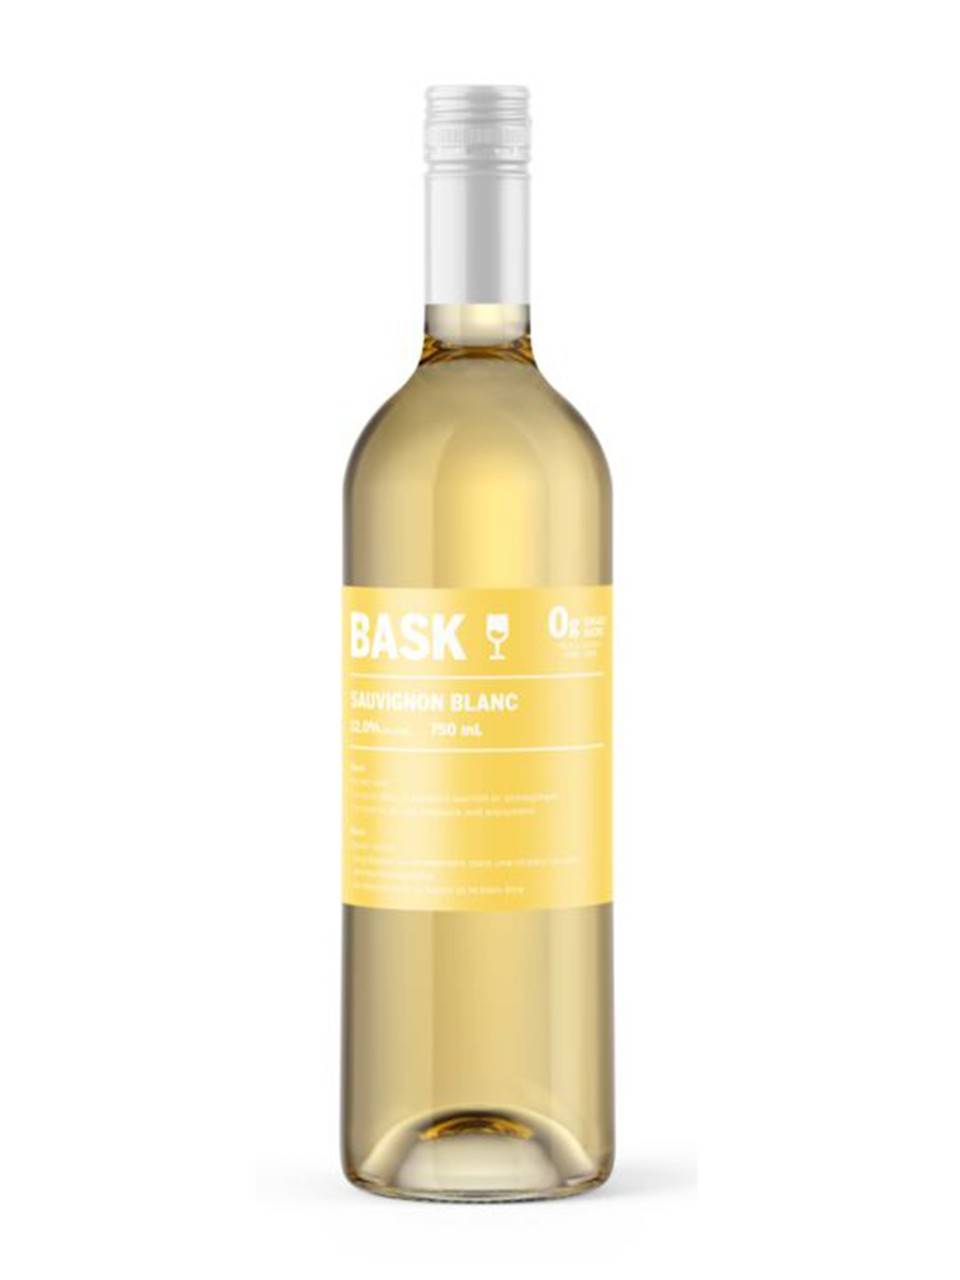 Bask Sauvignon Blanc Wine (750 ml)